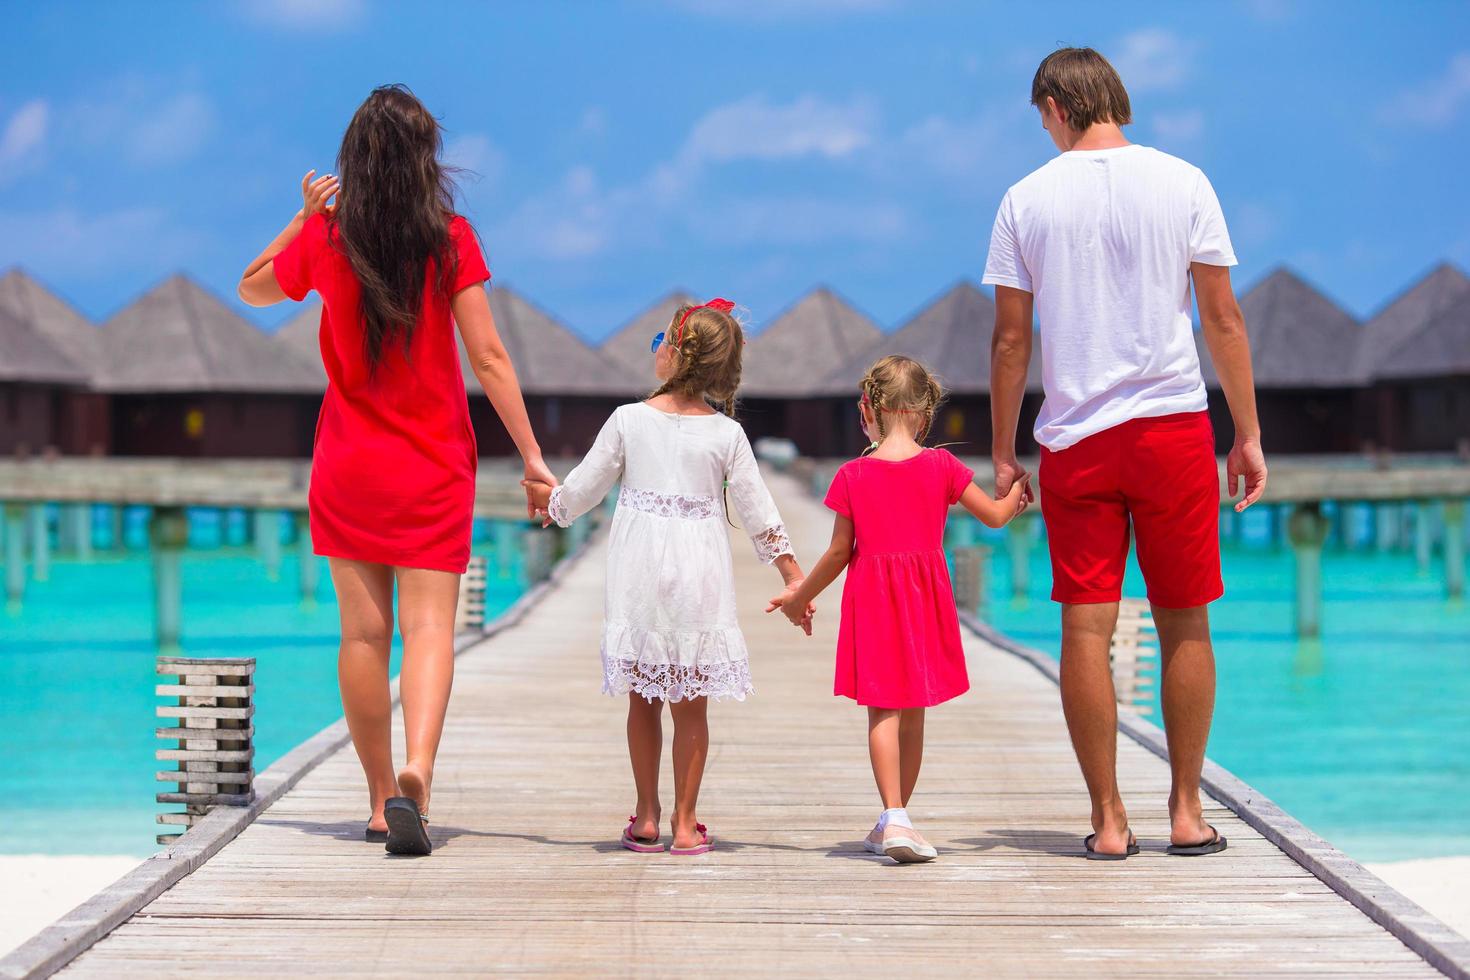 Maldives, South Asia, 2020 - Family walking on a dock at a resort photo